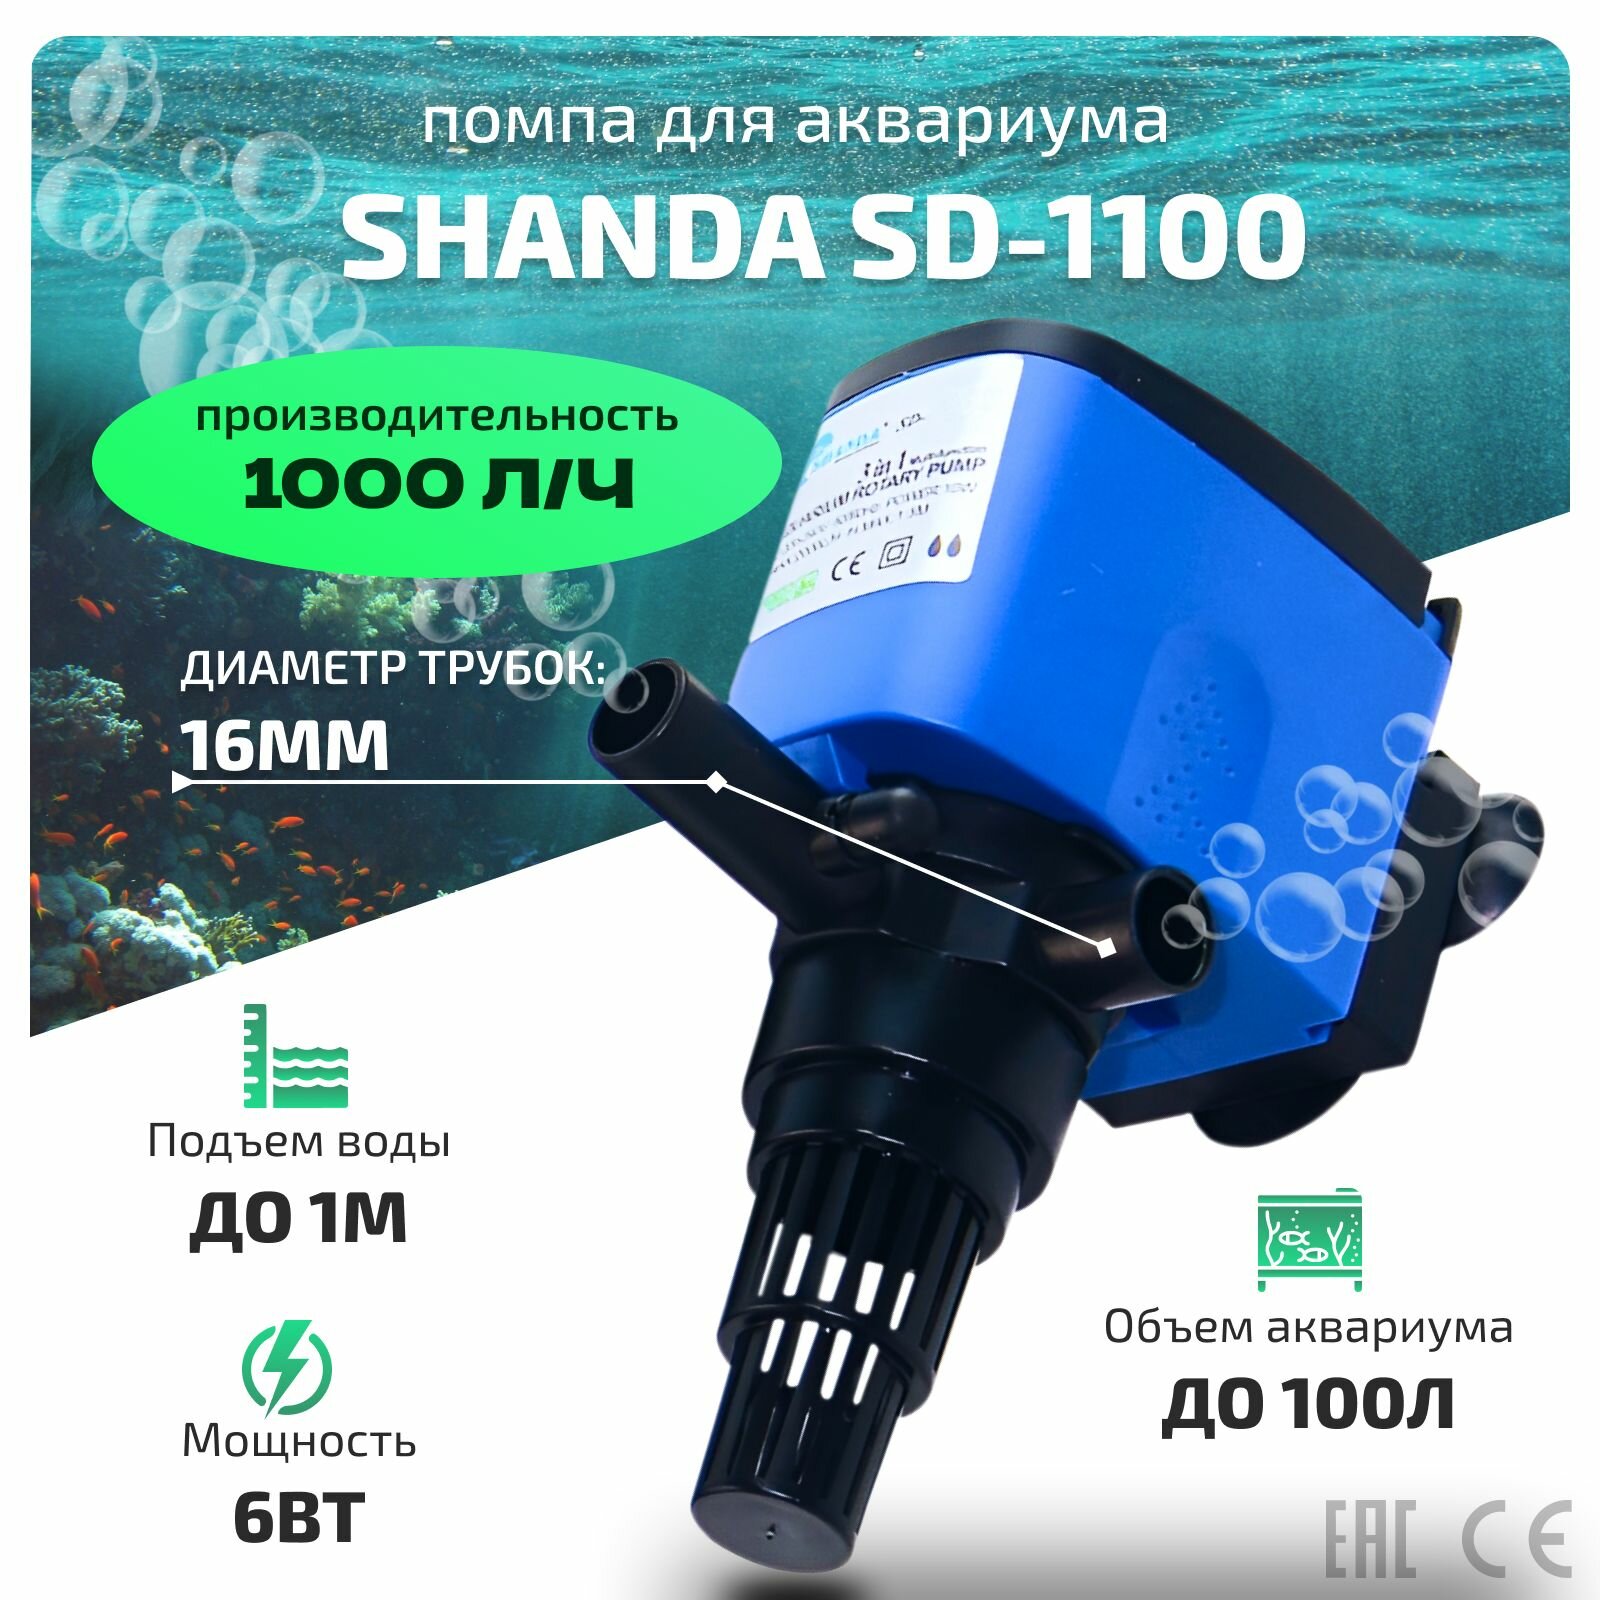 SHANDA SD-1100 Погружная помпа - циркулятор для аквариума до 100л, подъем воды до 1м, 1000л/ч, 6вт